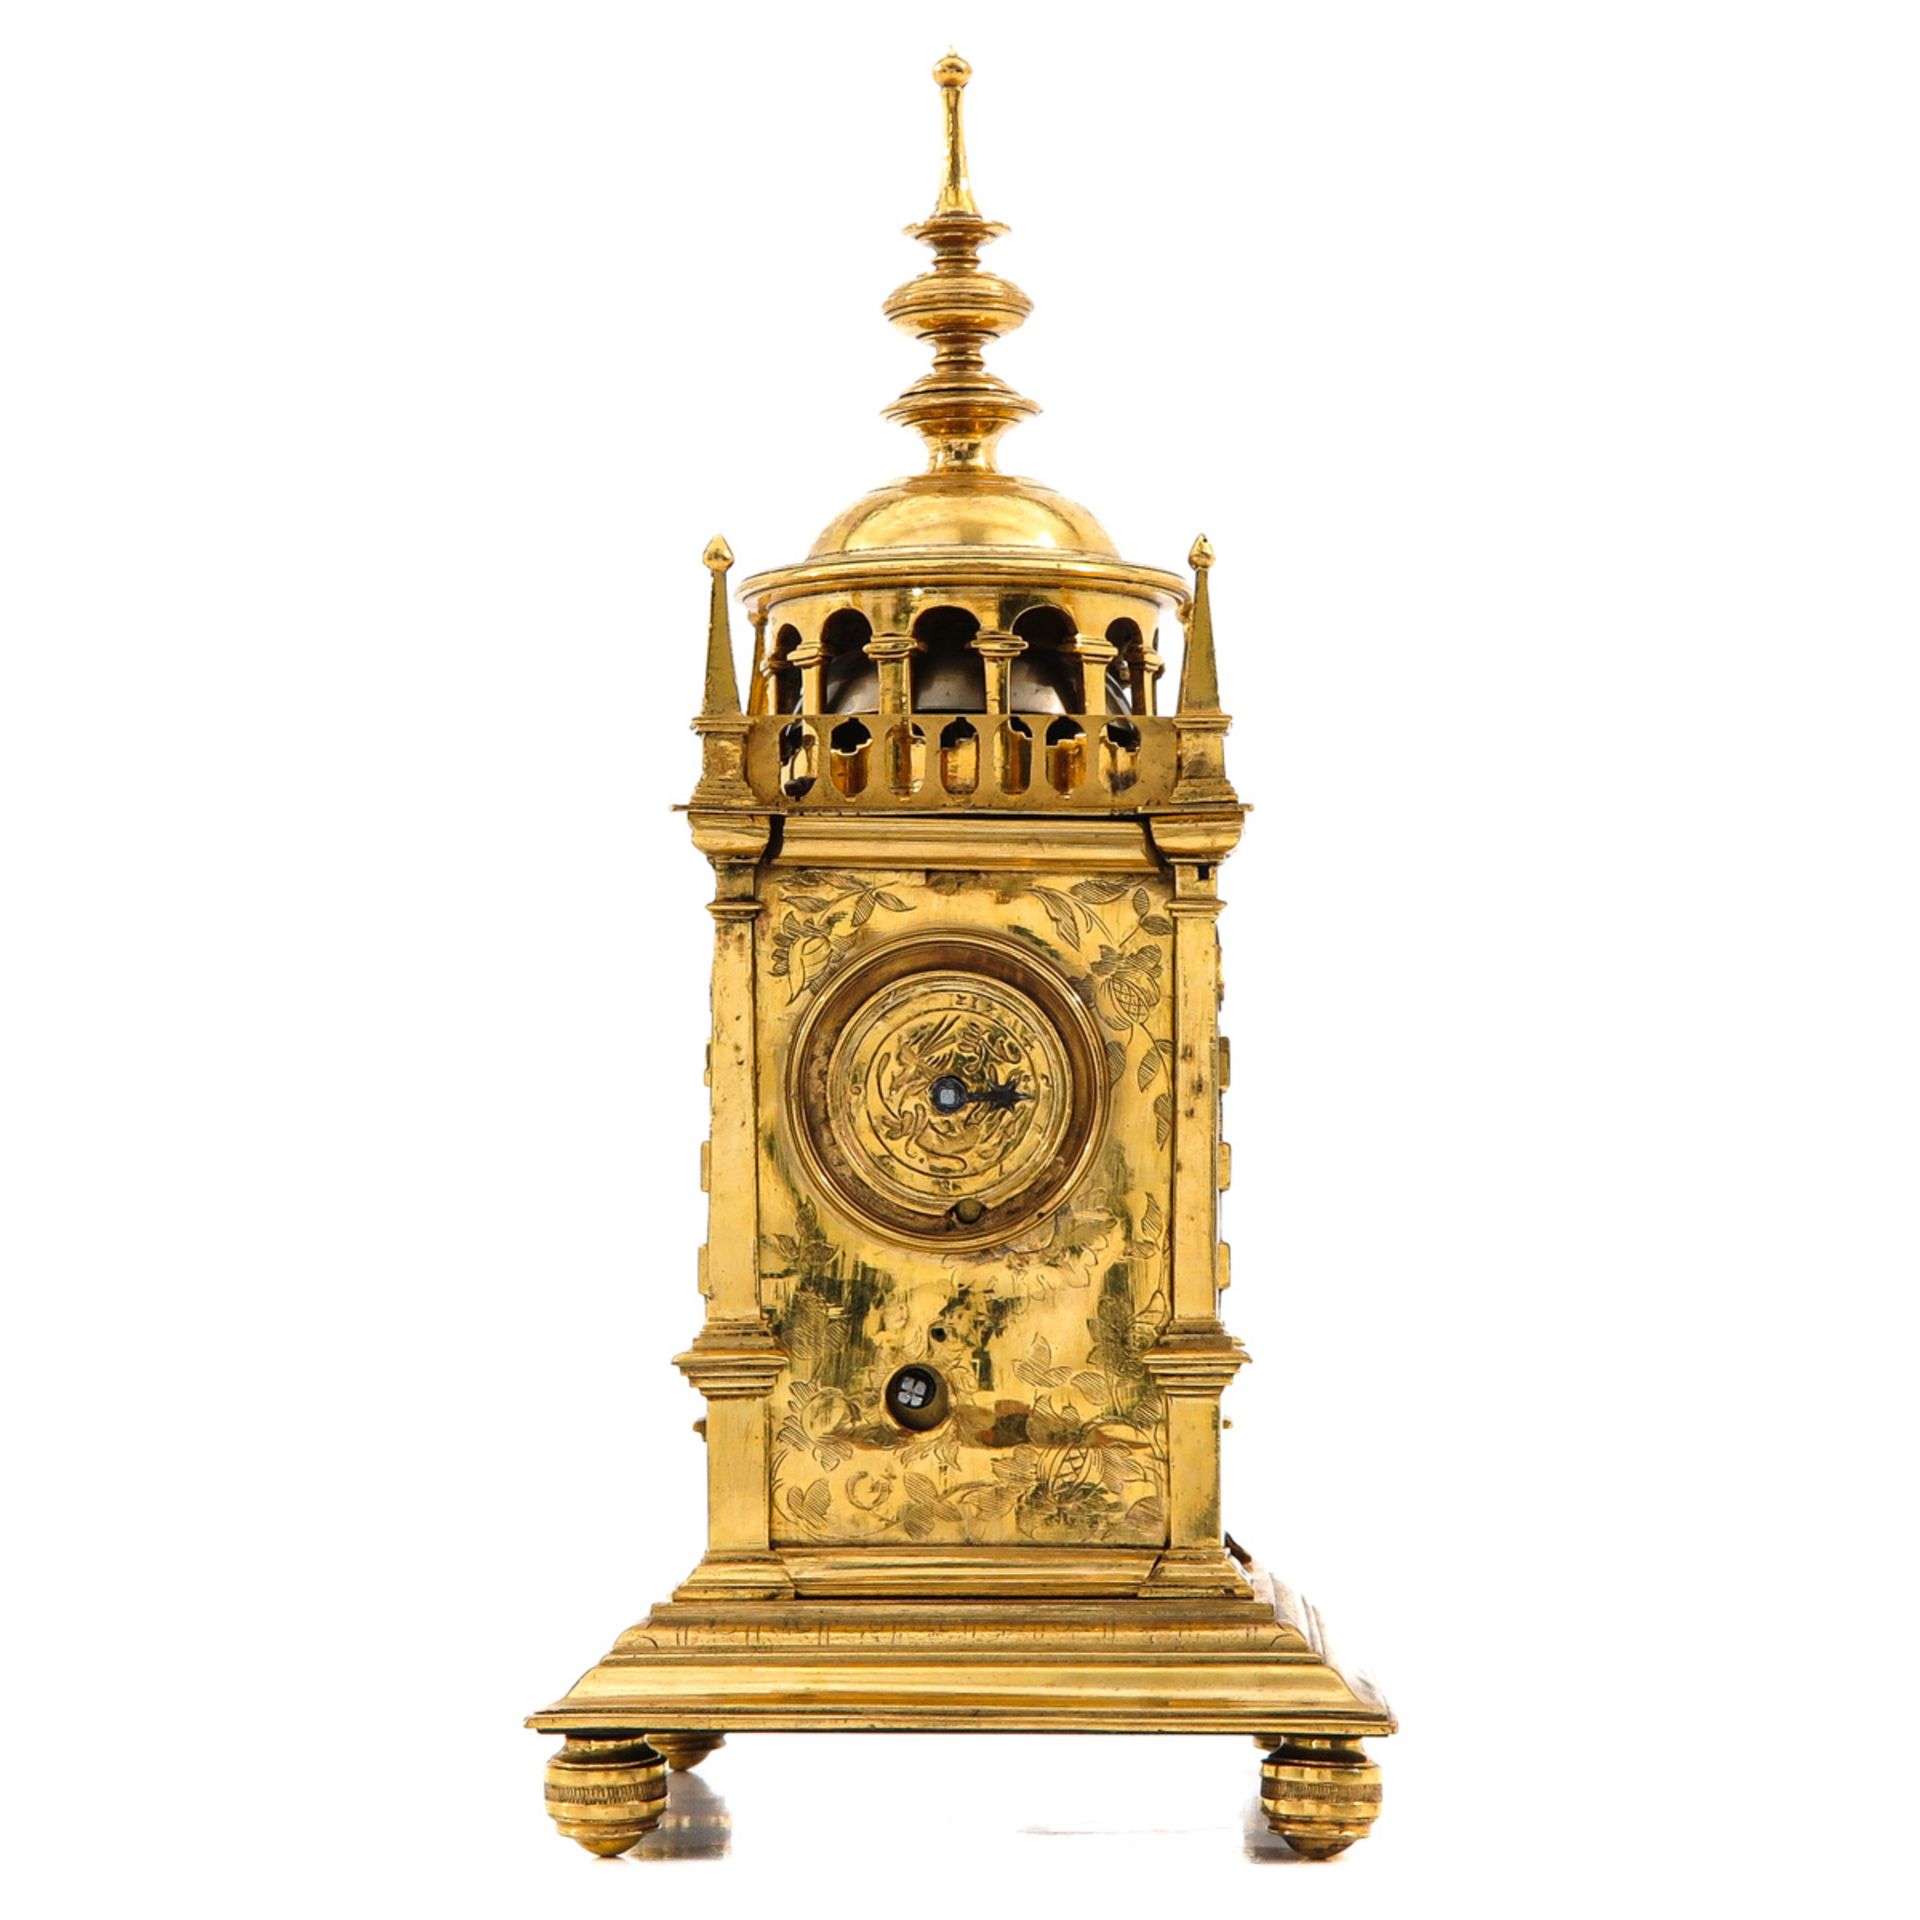 A 17th Century Gilded Turmuhr Clock - Image 3 of 10